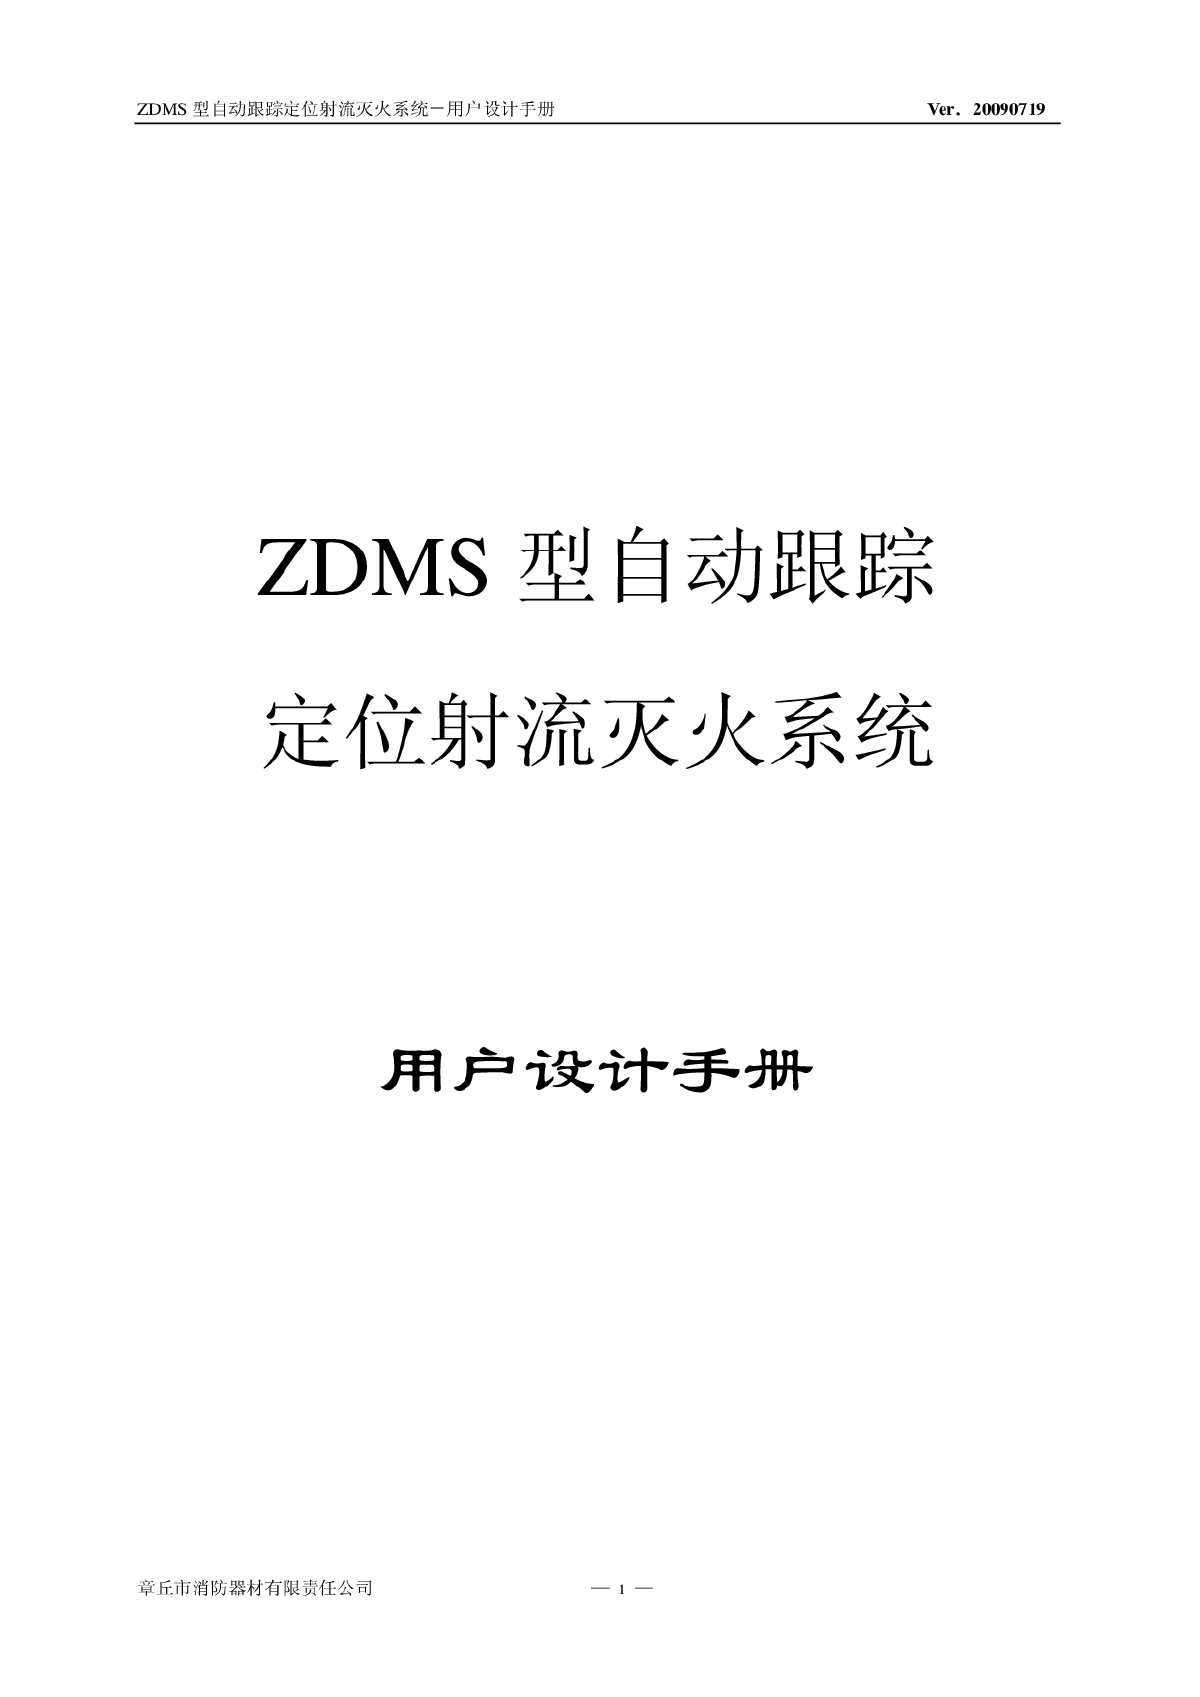 ZDMS 型自动跟踪定位射流灭火系统 -图一